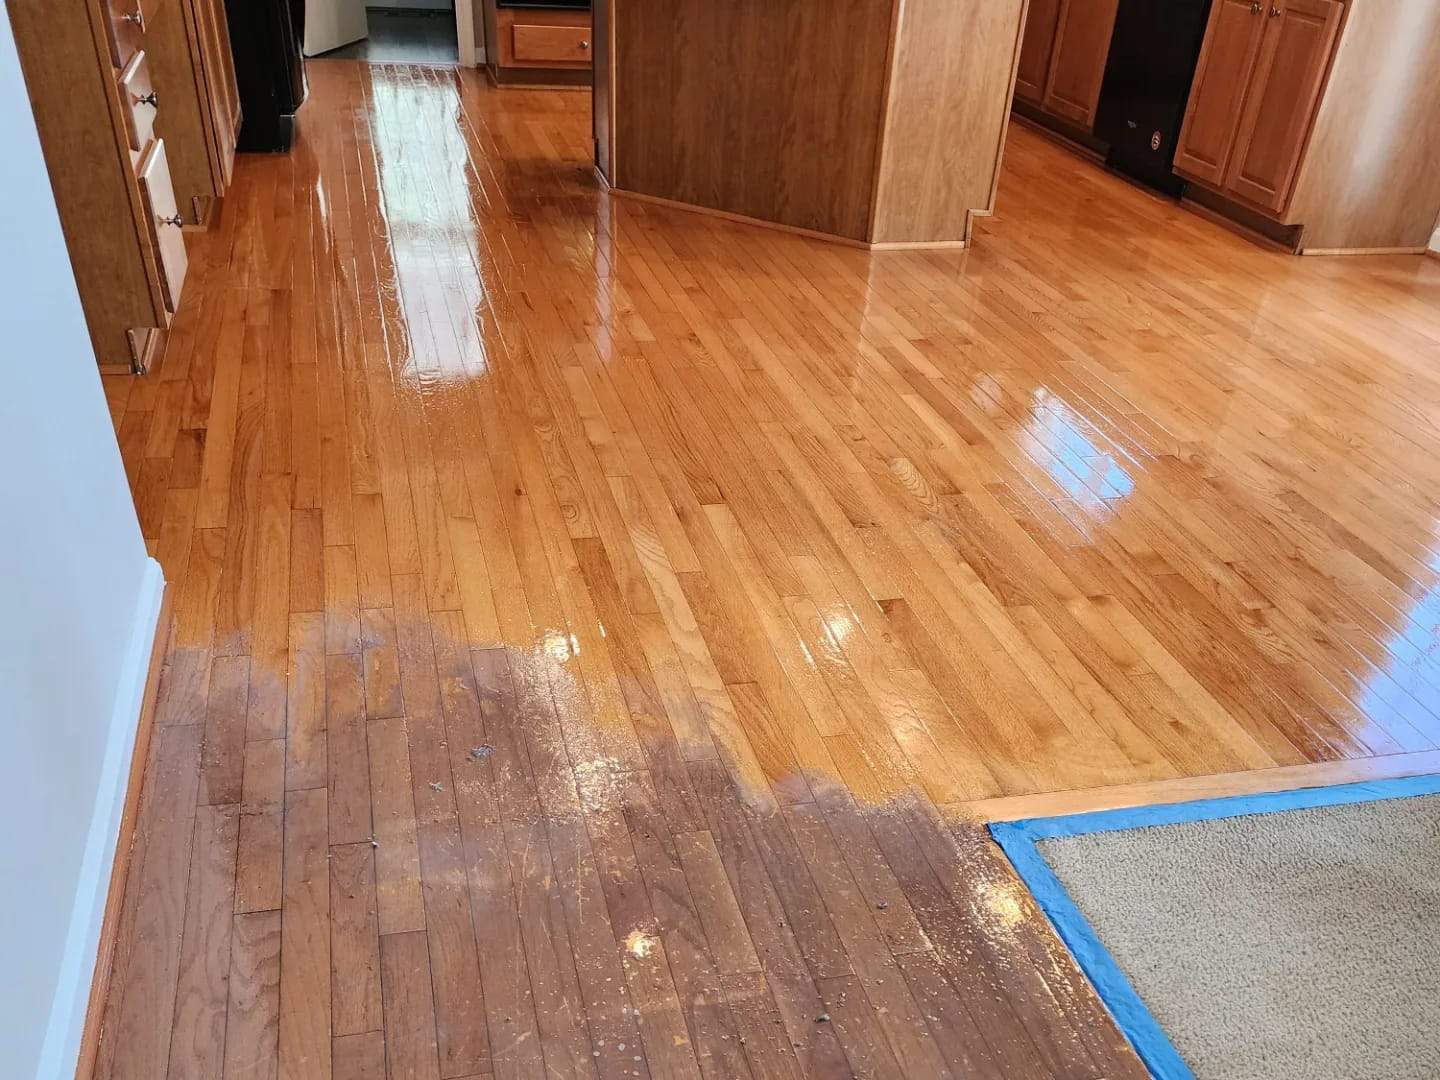 Cleaning Hardwood Floor removing wax